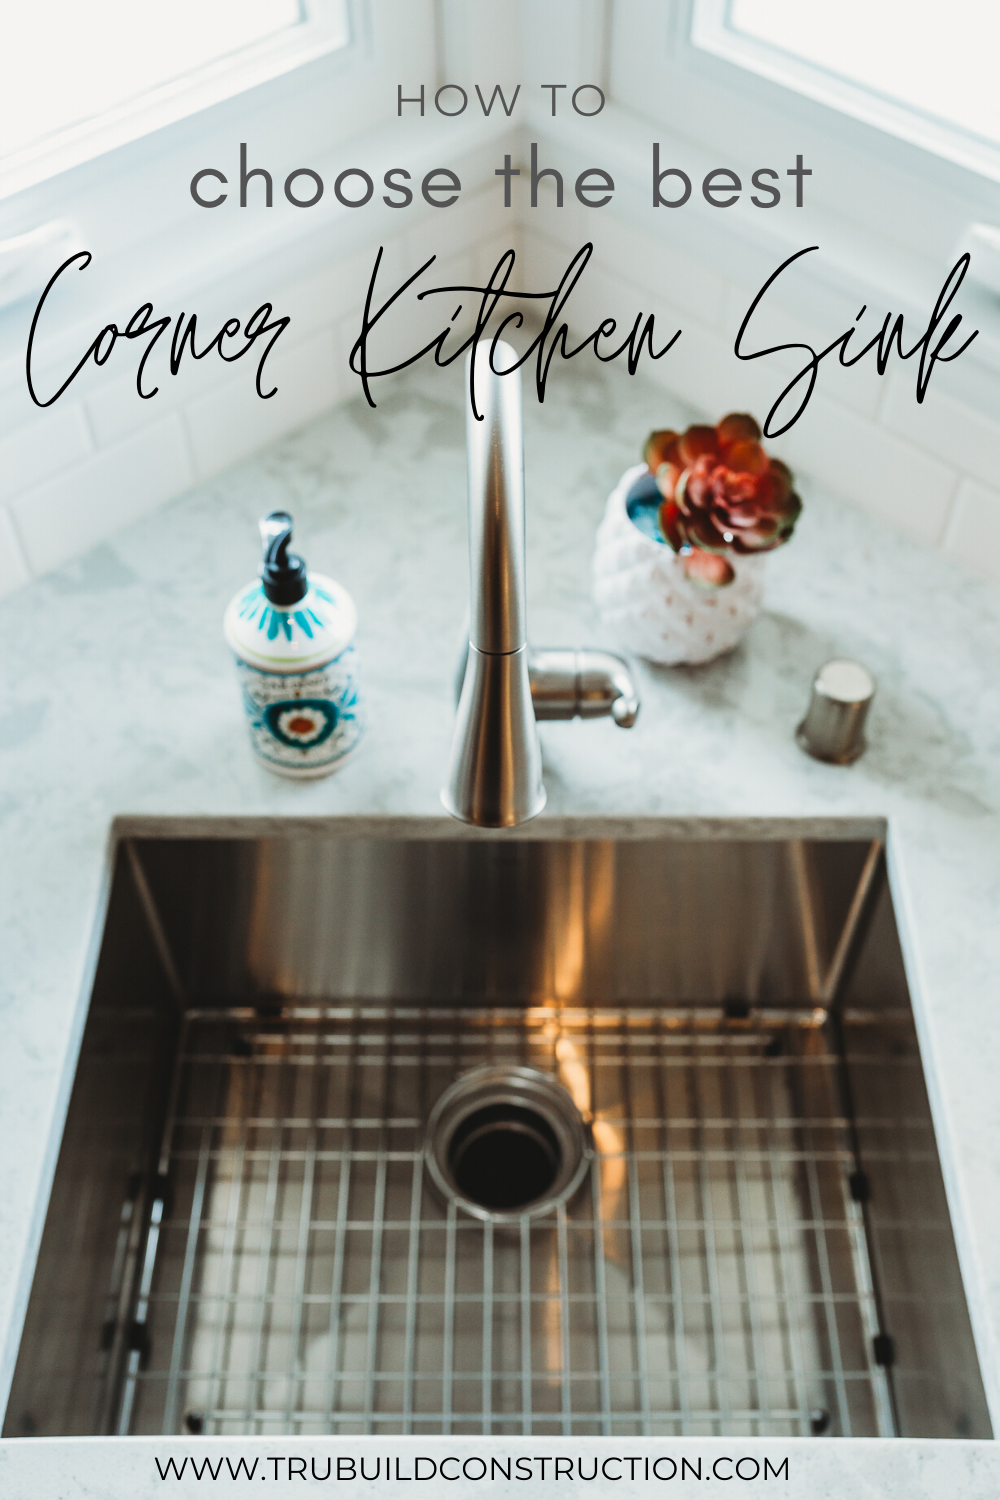 How To Choose The Best Corner Kitchen Sink Trubuild Construction